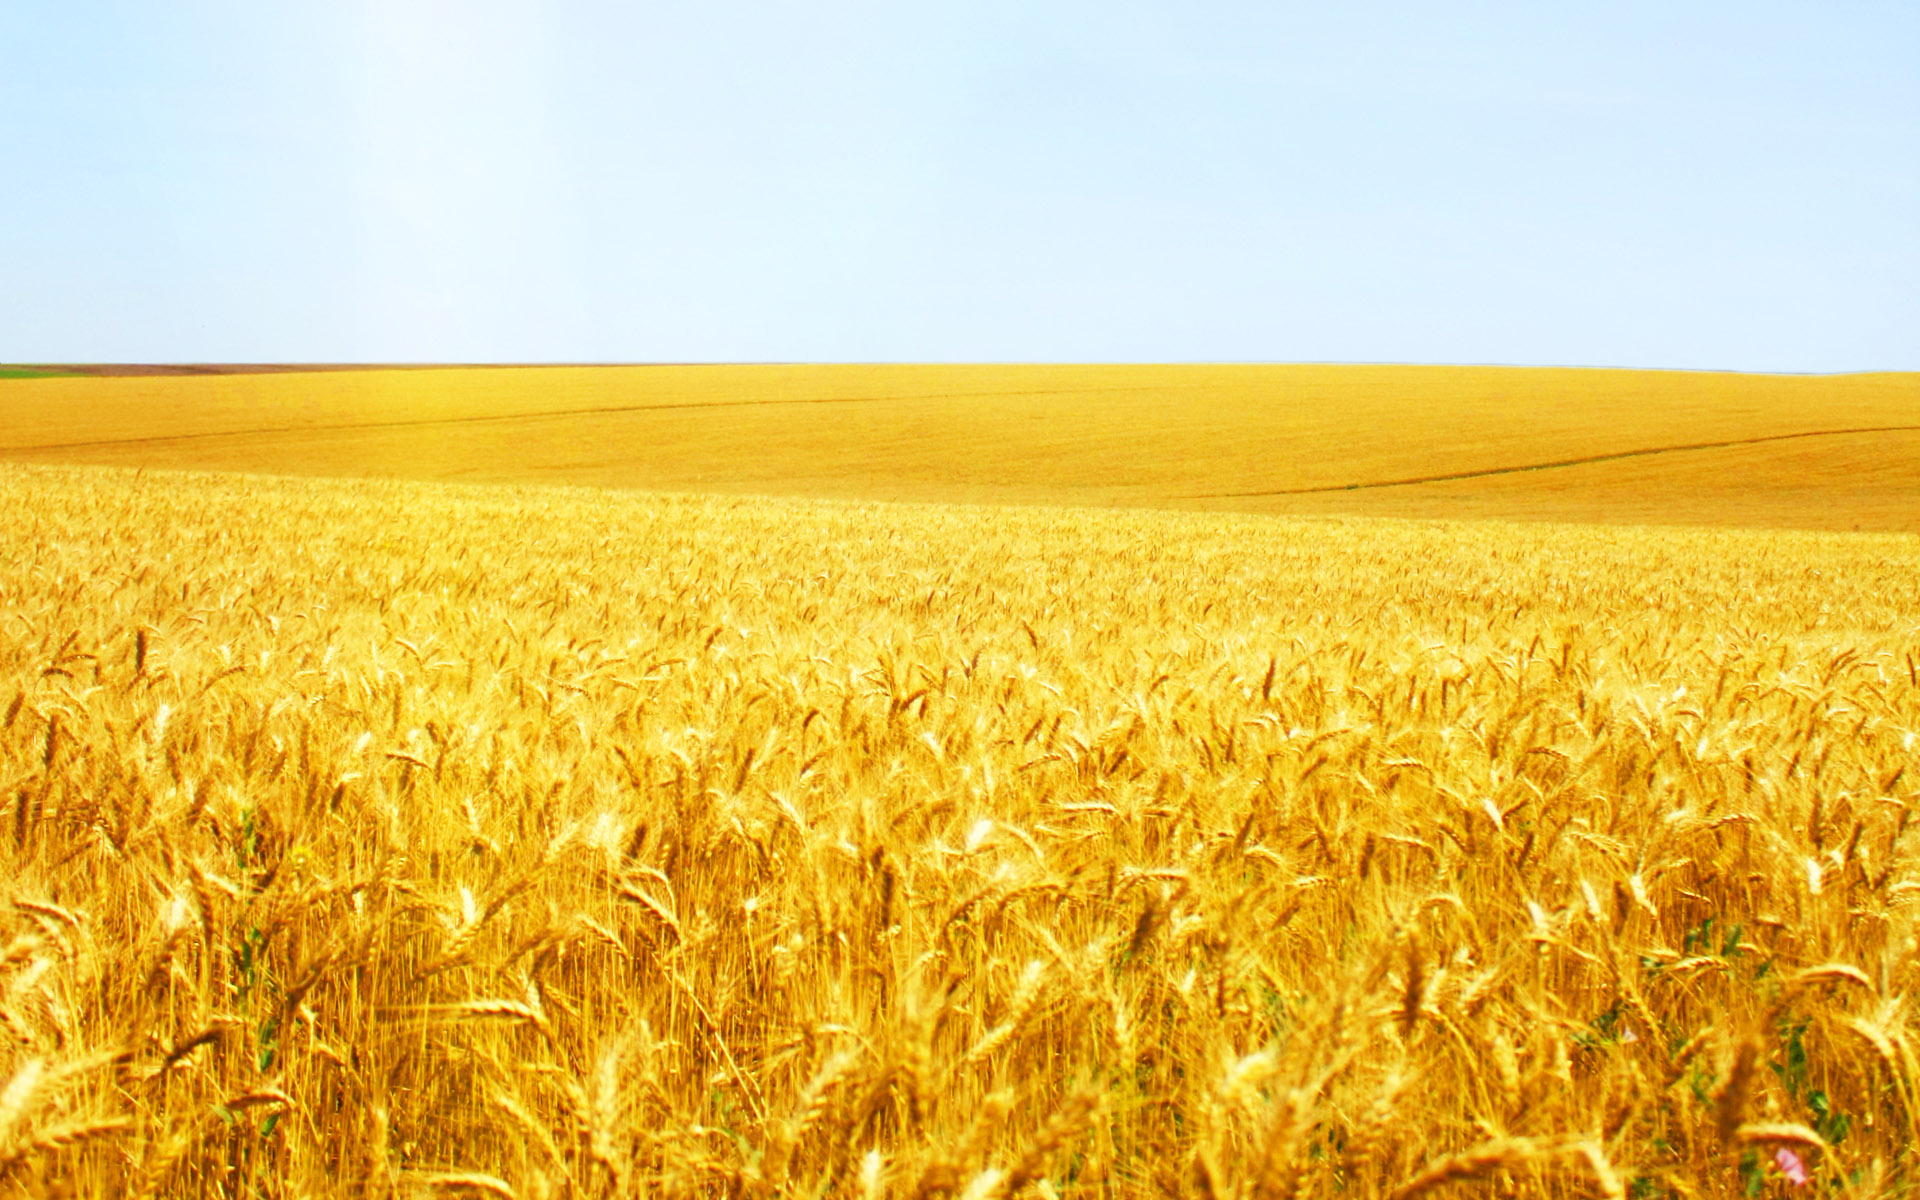 Hd Wheat Crop Material - Wheat Field - HD Wallpaper 